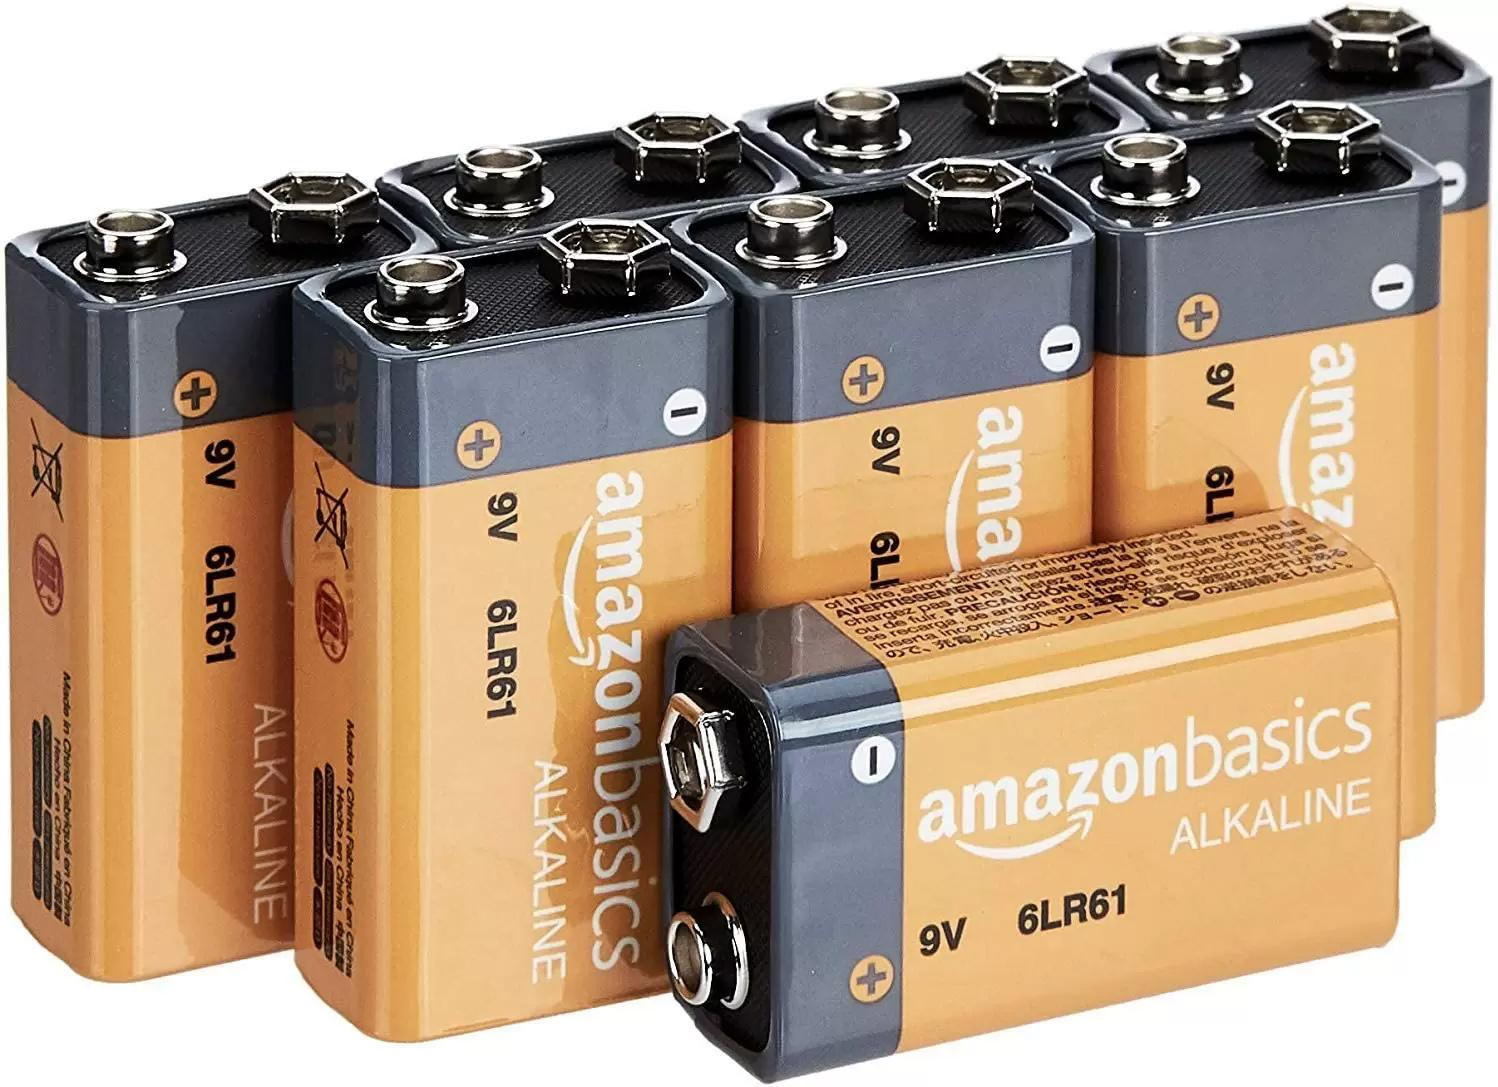 8 AmazonBasics 9 Volt Everyday Alkaline Batteries for $6.23 Shipped